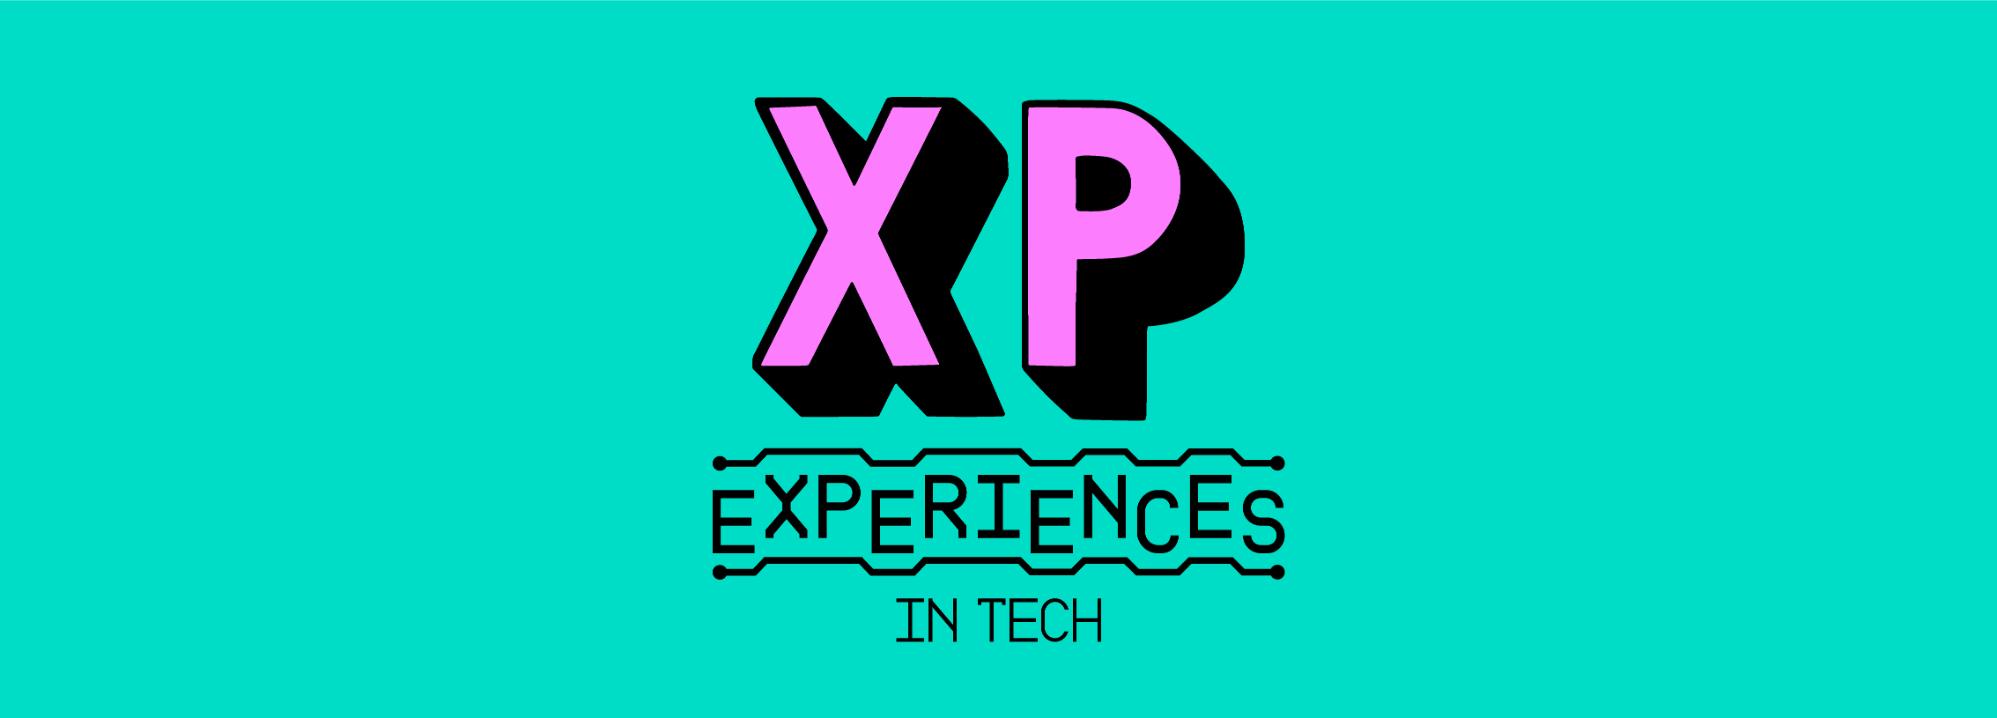 XP Experiences in Tech